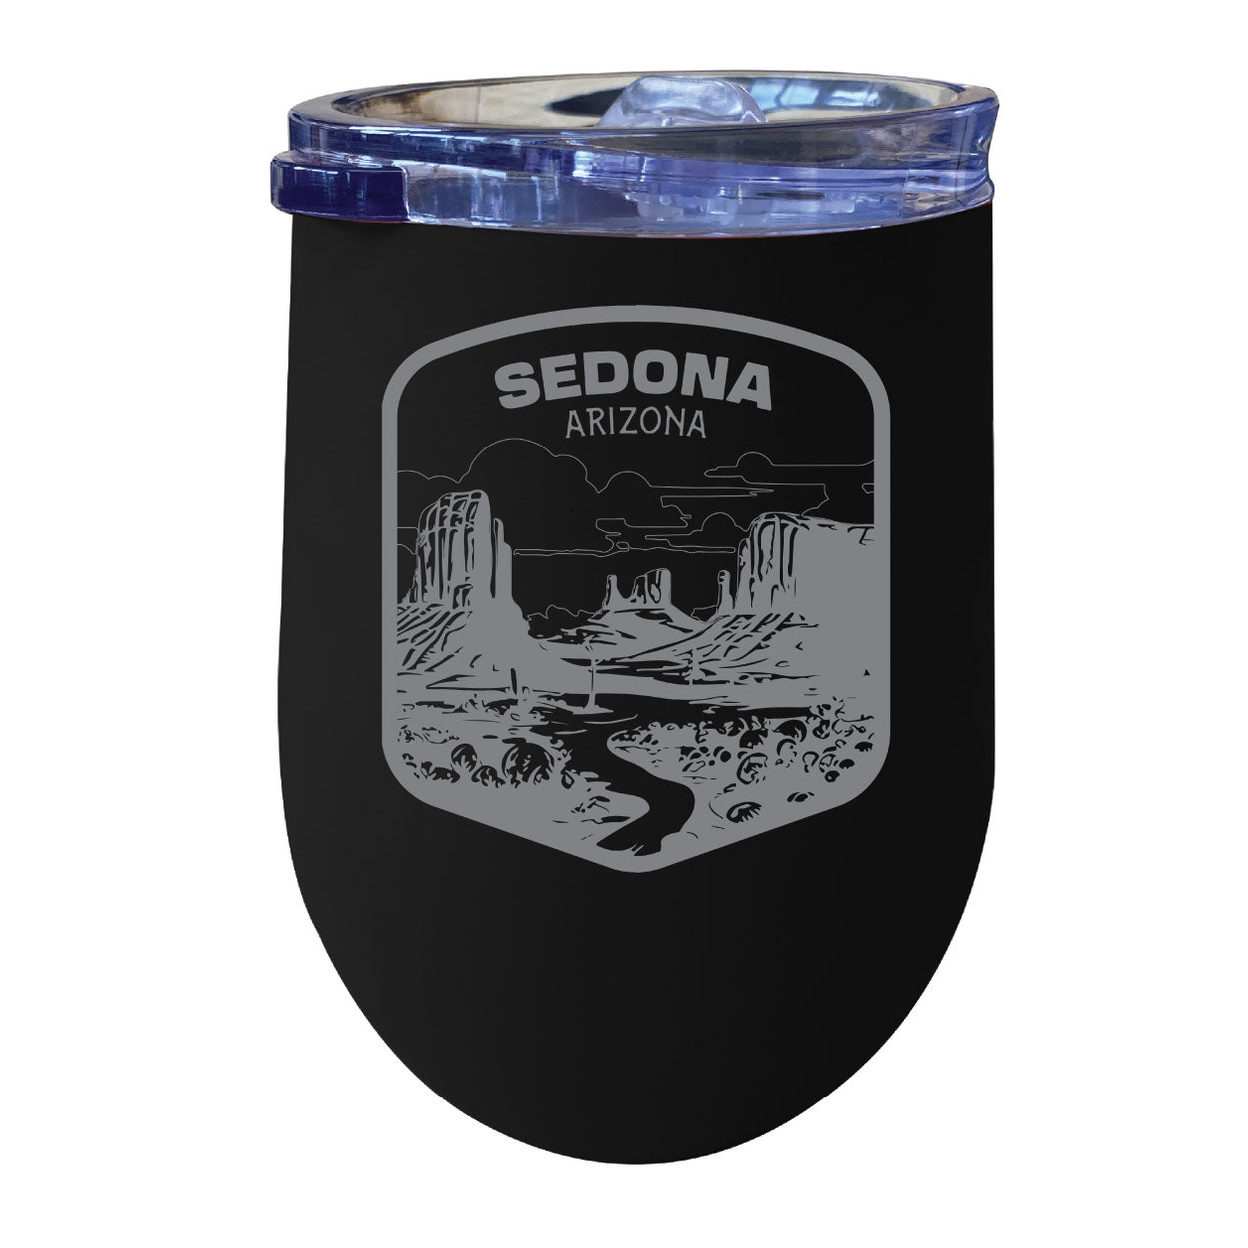 Sedona Arizona Souvenir 12 Oz Engraved Insulated Wine Stainless Steel Tumbler - Black,,Single Unit